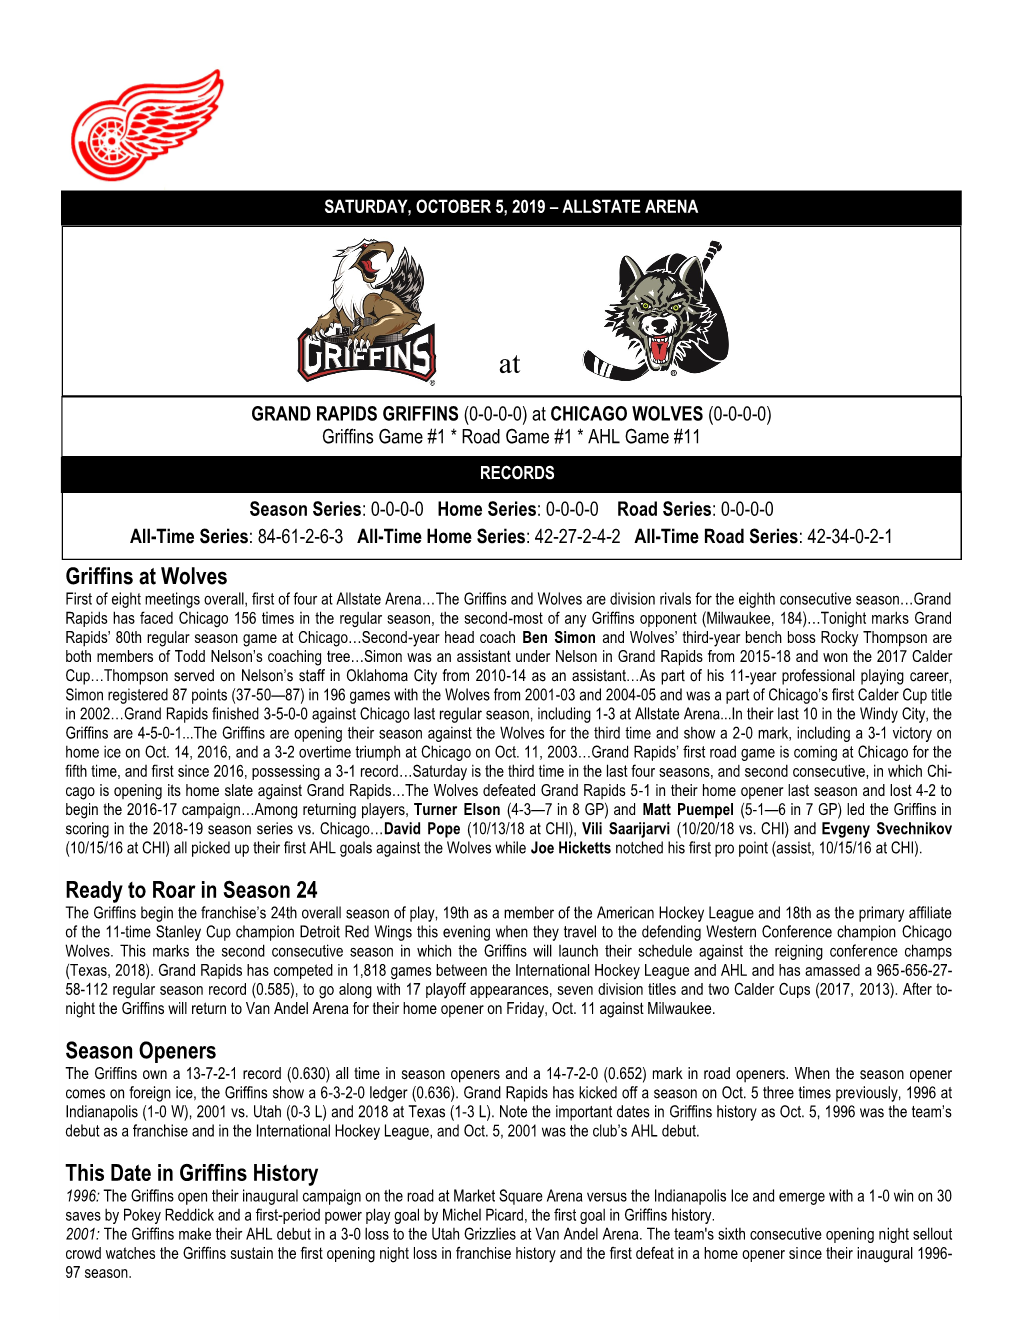 GRIFFINS (0-0-0-0) at CHICAGO WOLVES (0-0-0-0) Griffins Game #1 * Road Game #1 * AHL Game #11